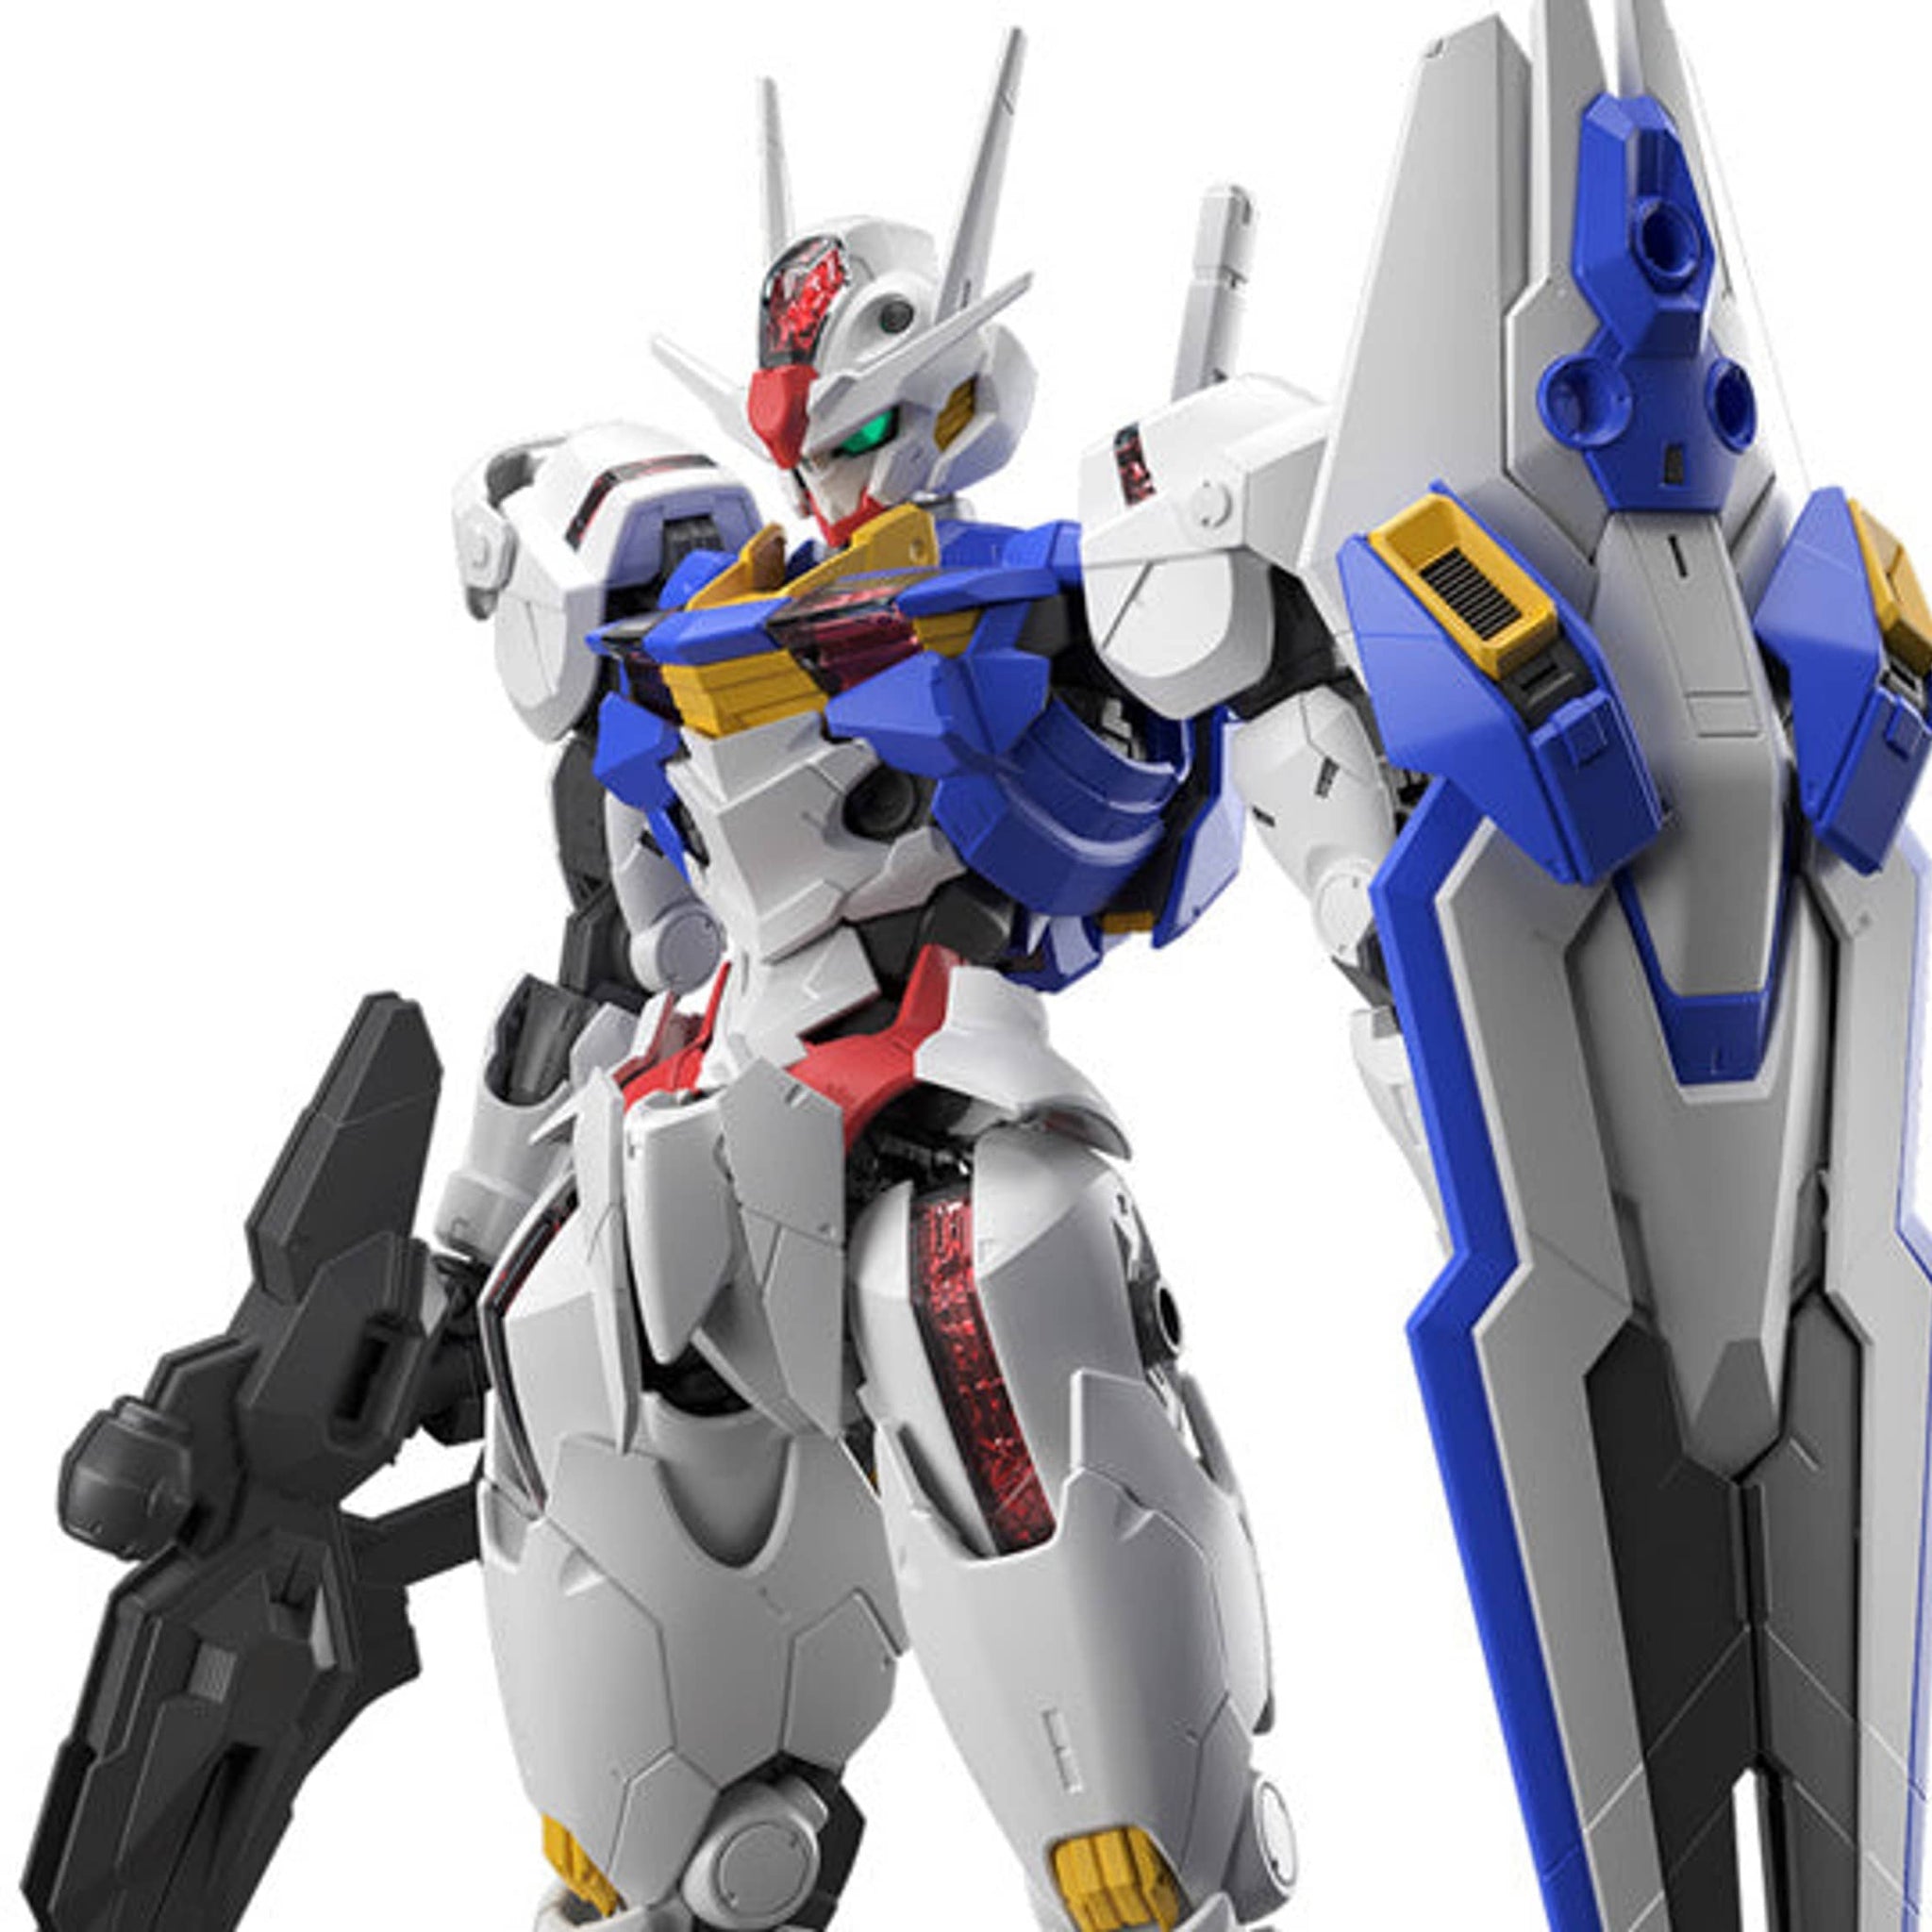 Mobile Suit Gundam: The Witch from Mercury Full Mechanics Gundam Aerial 1/100 Scale Model Kit 